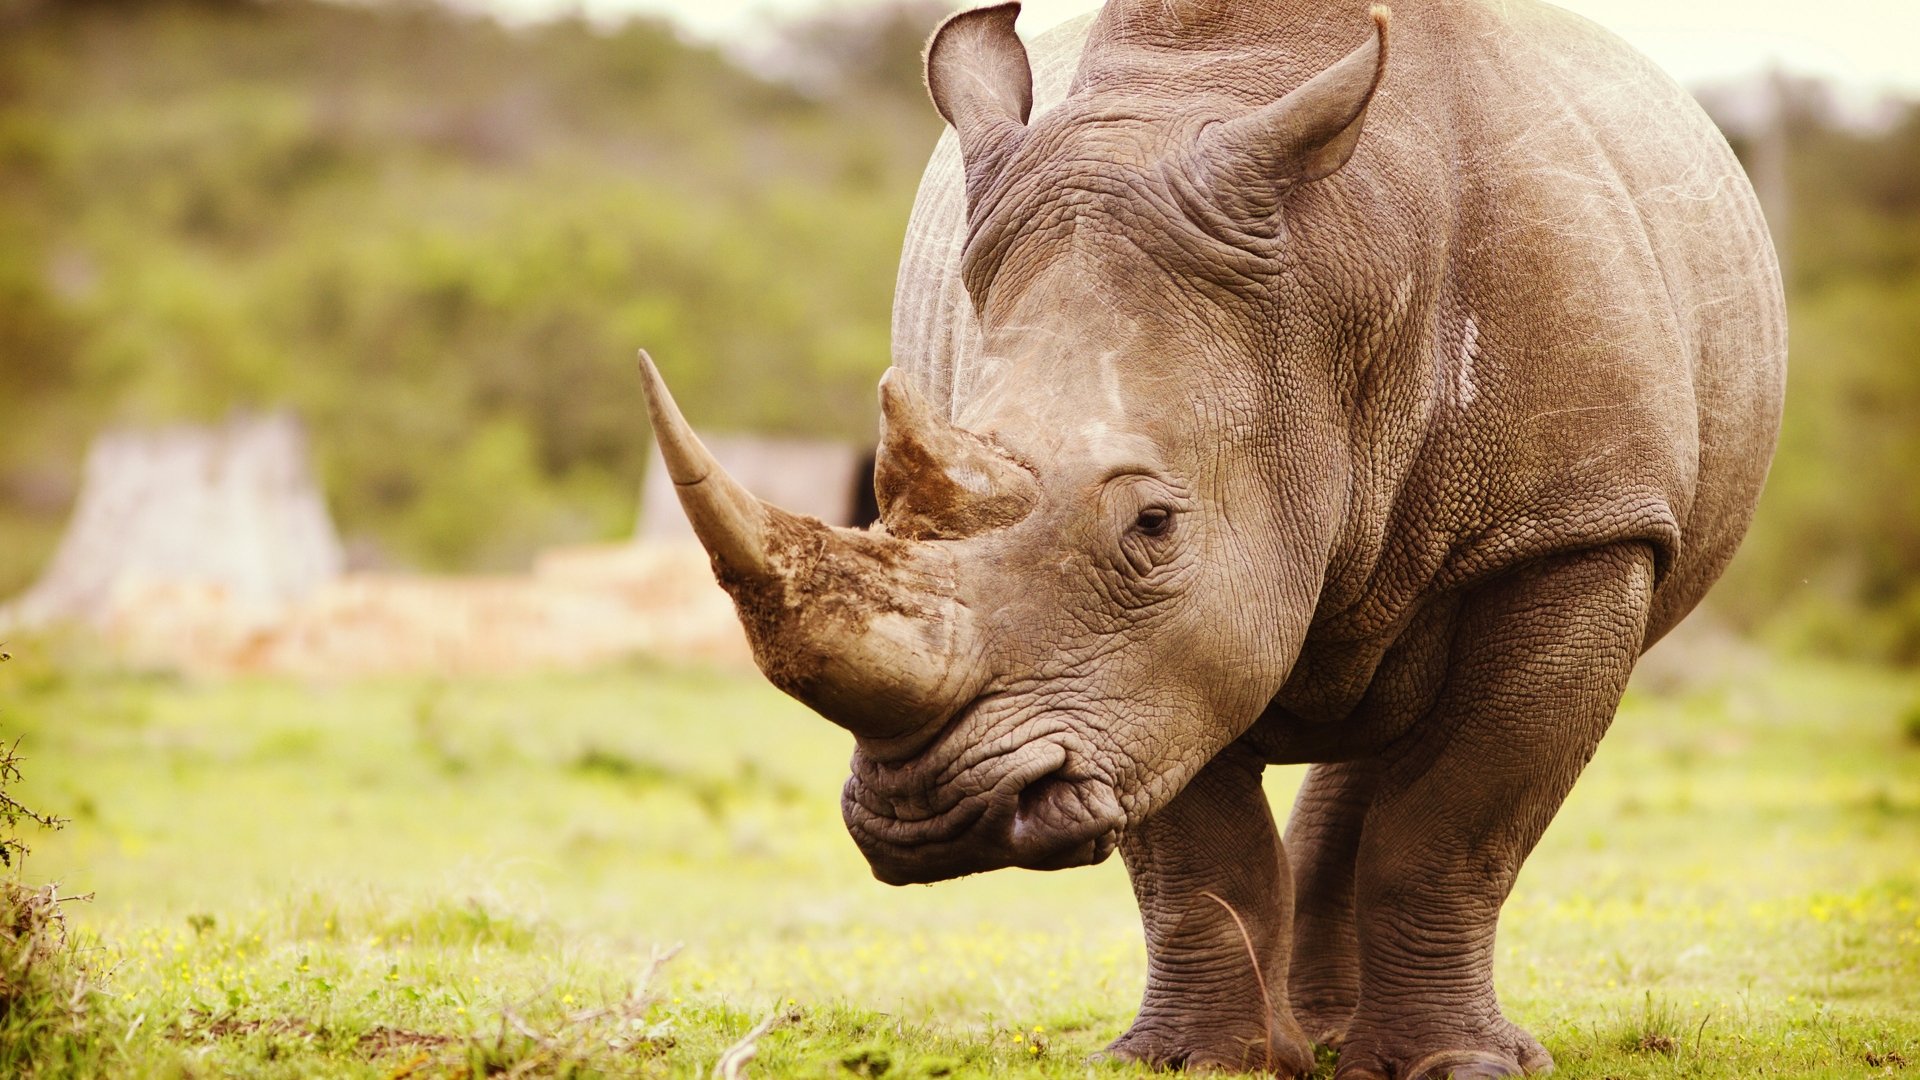 fond d'écran rhinocéros,rhinocéros,animal terrestre,rhinocéros blanc,rhinocéros noir,rhinocéros indien